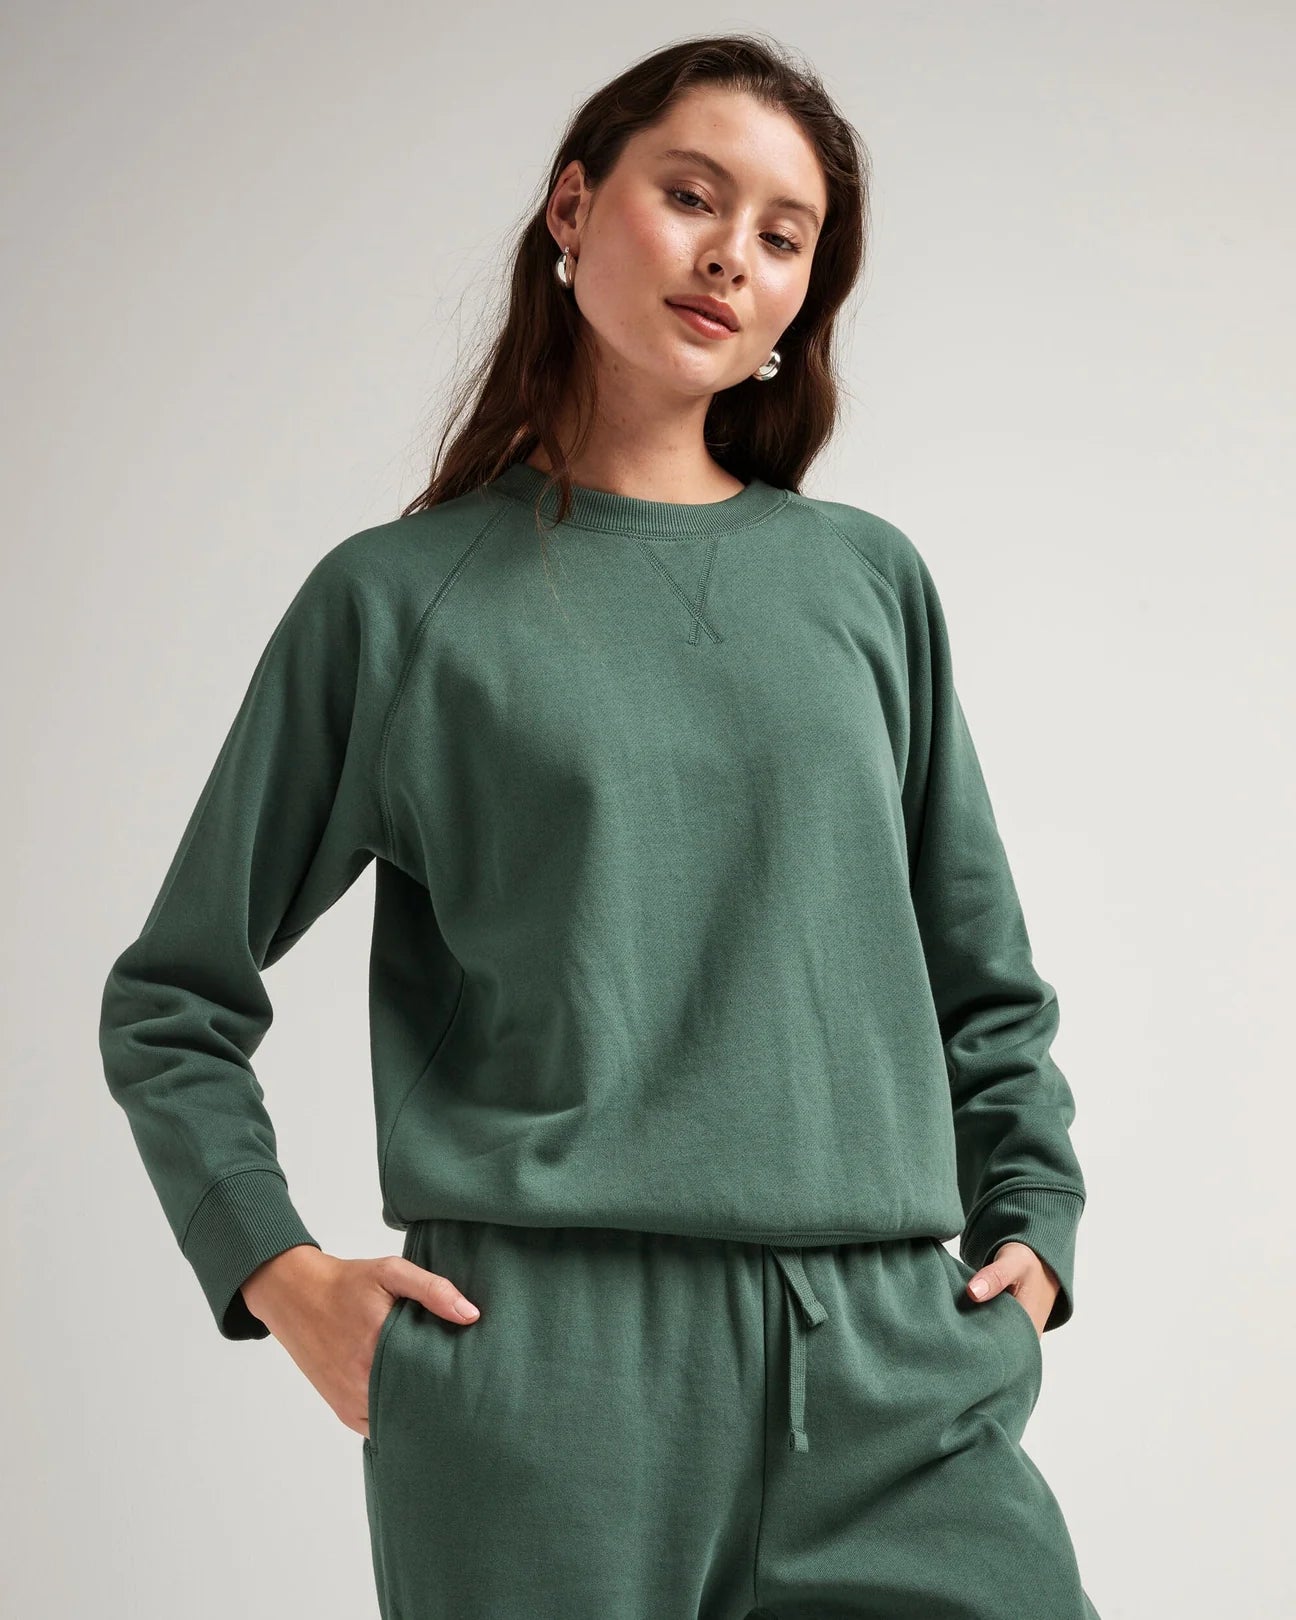 Recycled Fleece Sweatshirt in Sage Leaf | Richer Poorer